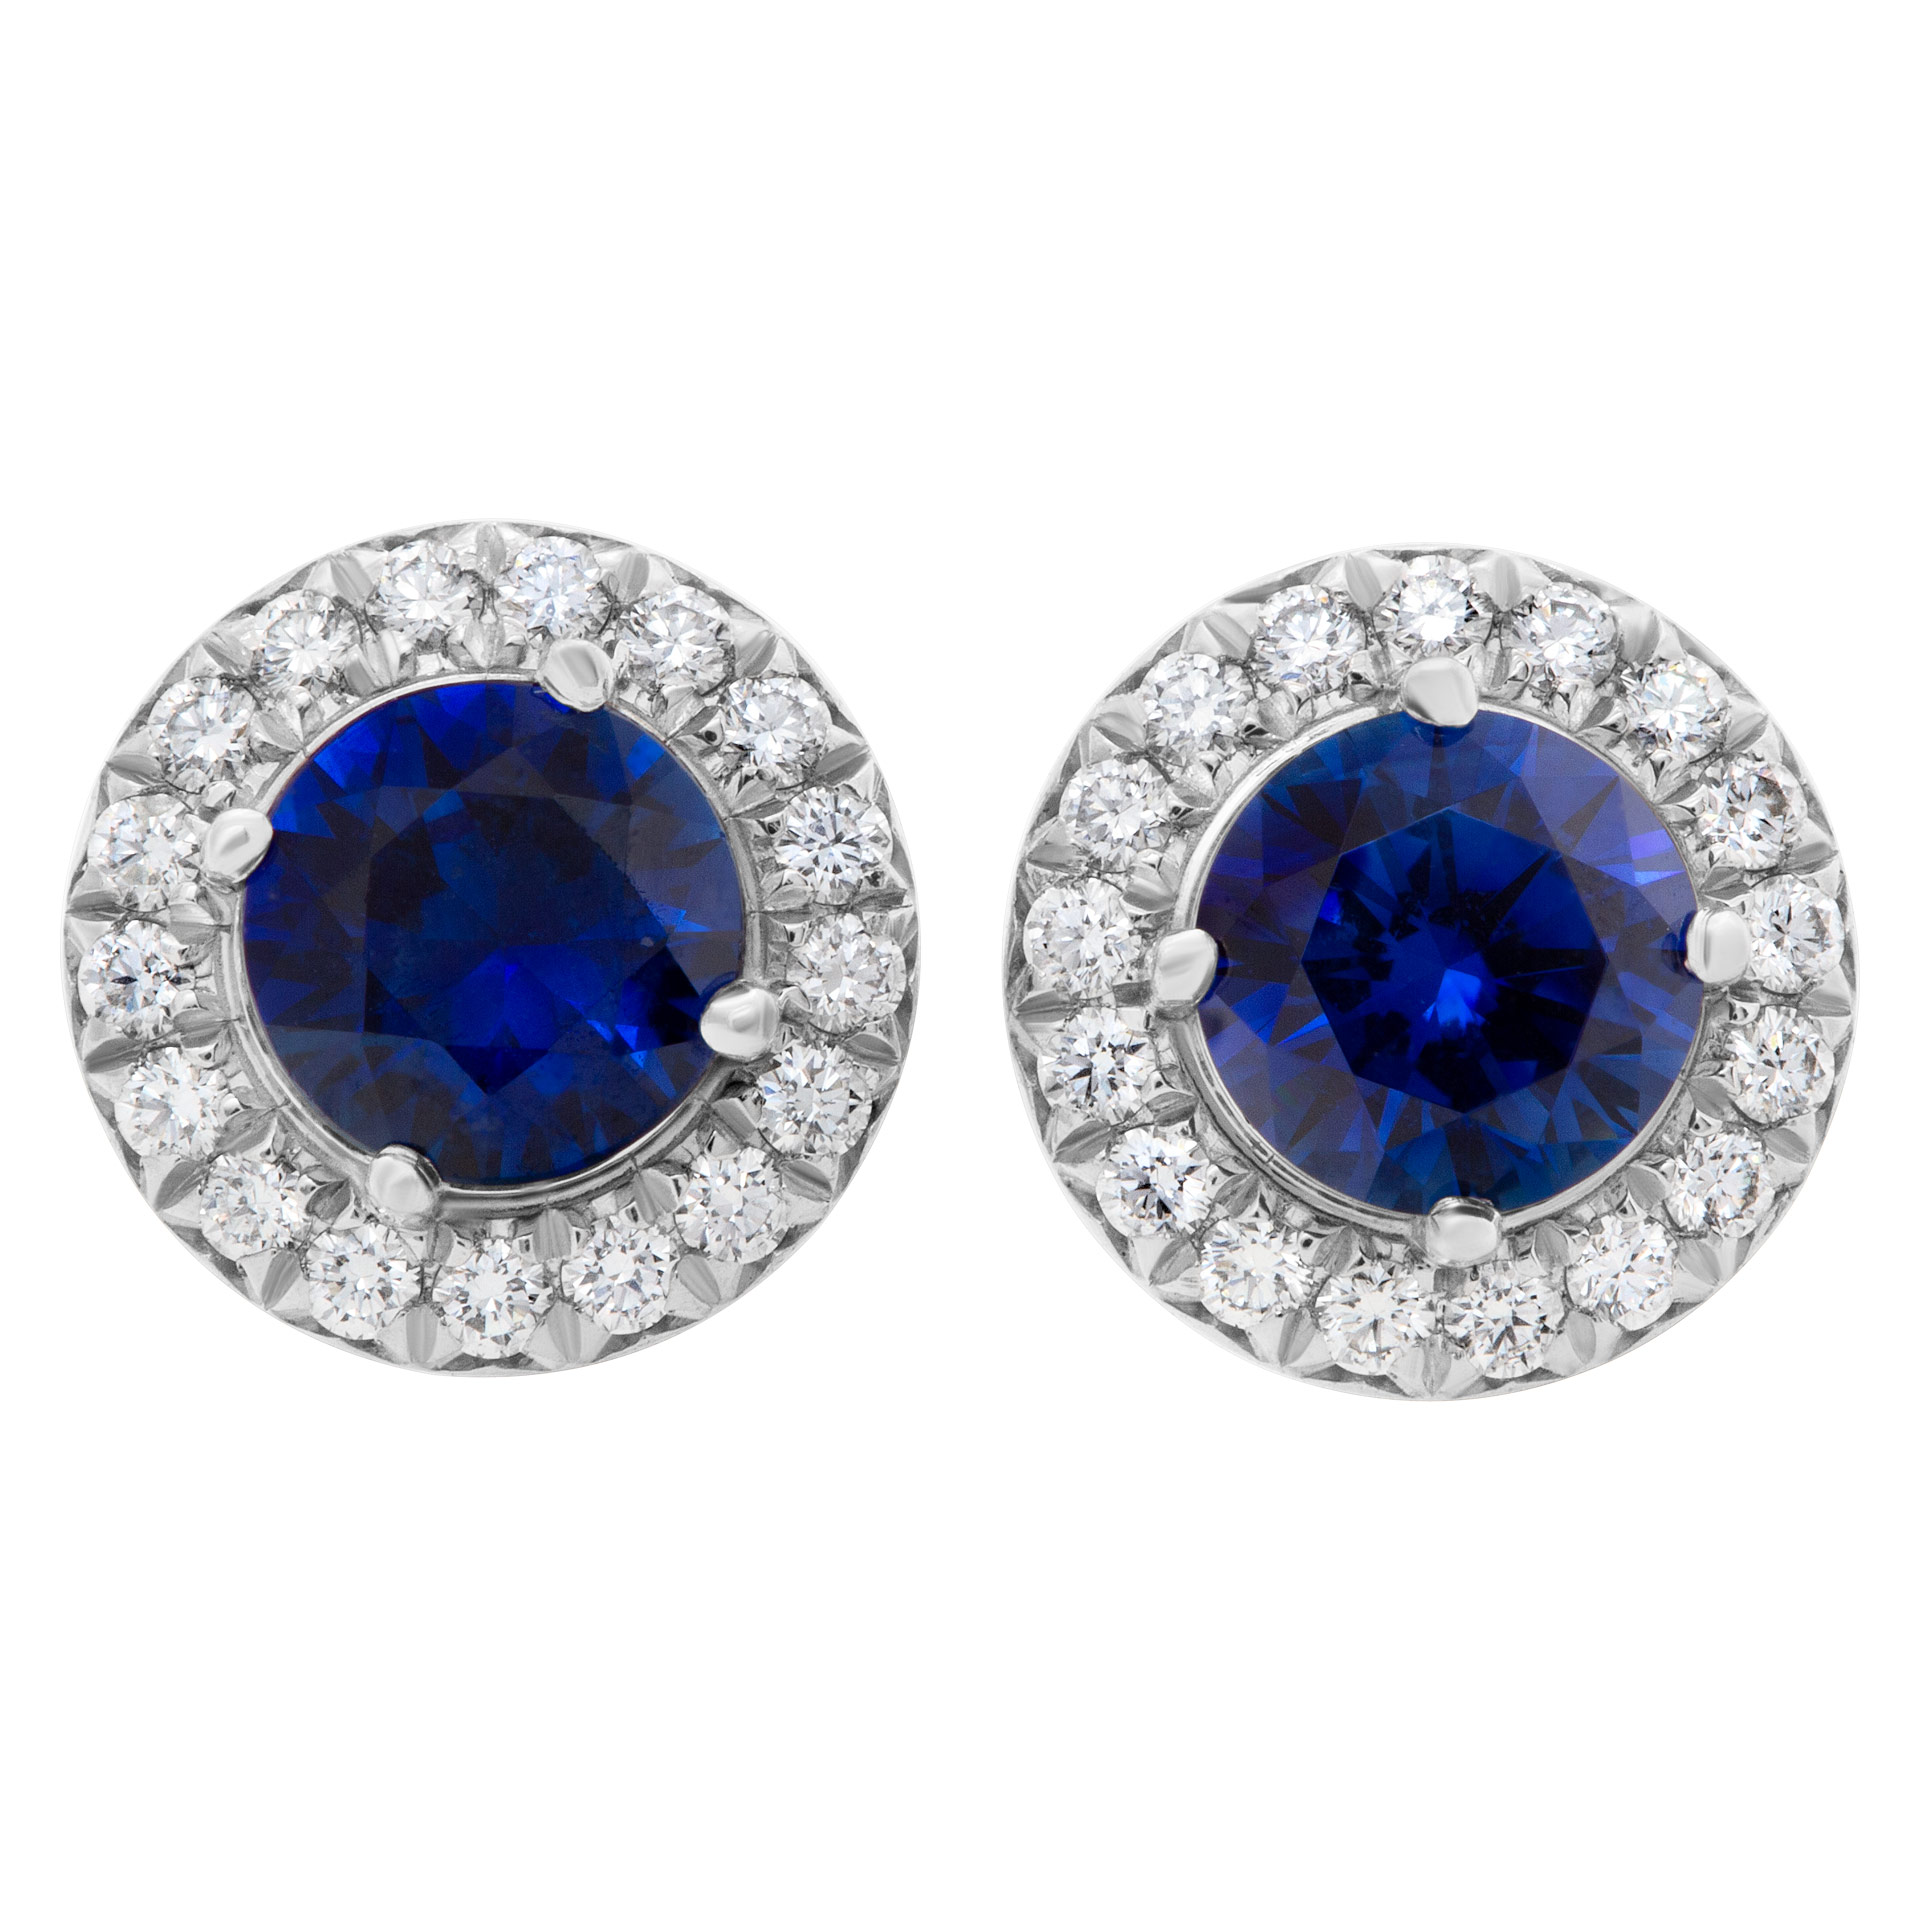 Tiffany & Co. Diamond and Sapphire studs in platinum